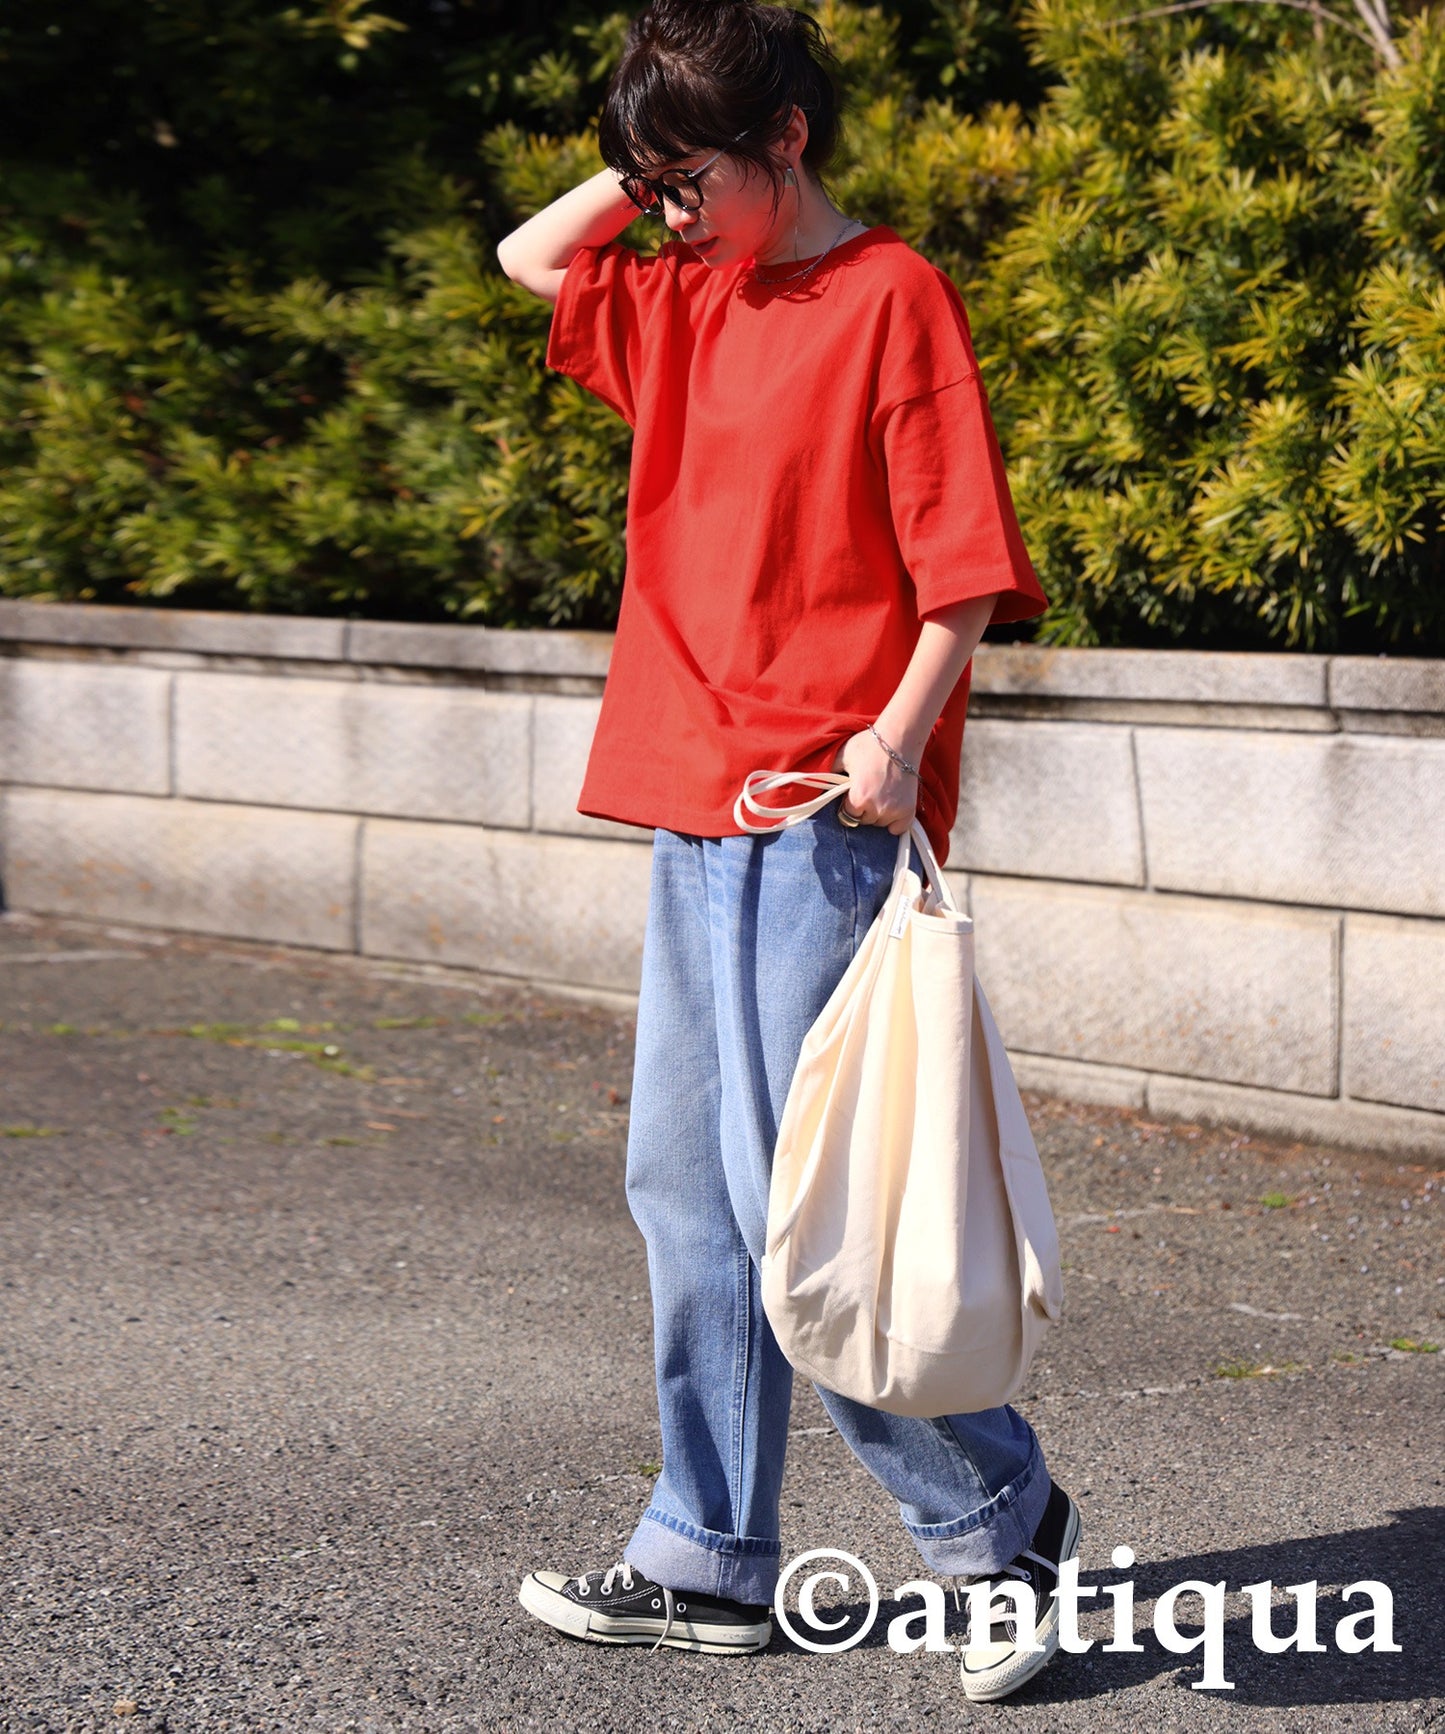 Basque fabric Ladies T -shirt Short-Sleeve Cotton 100% plain